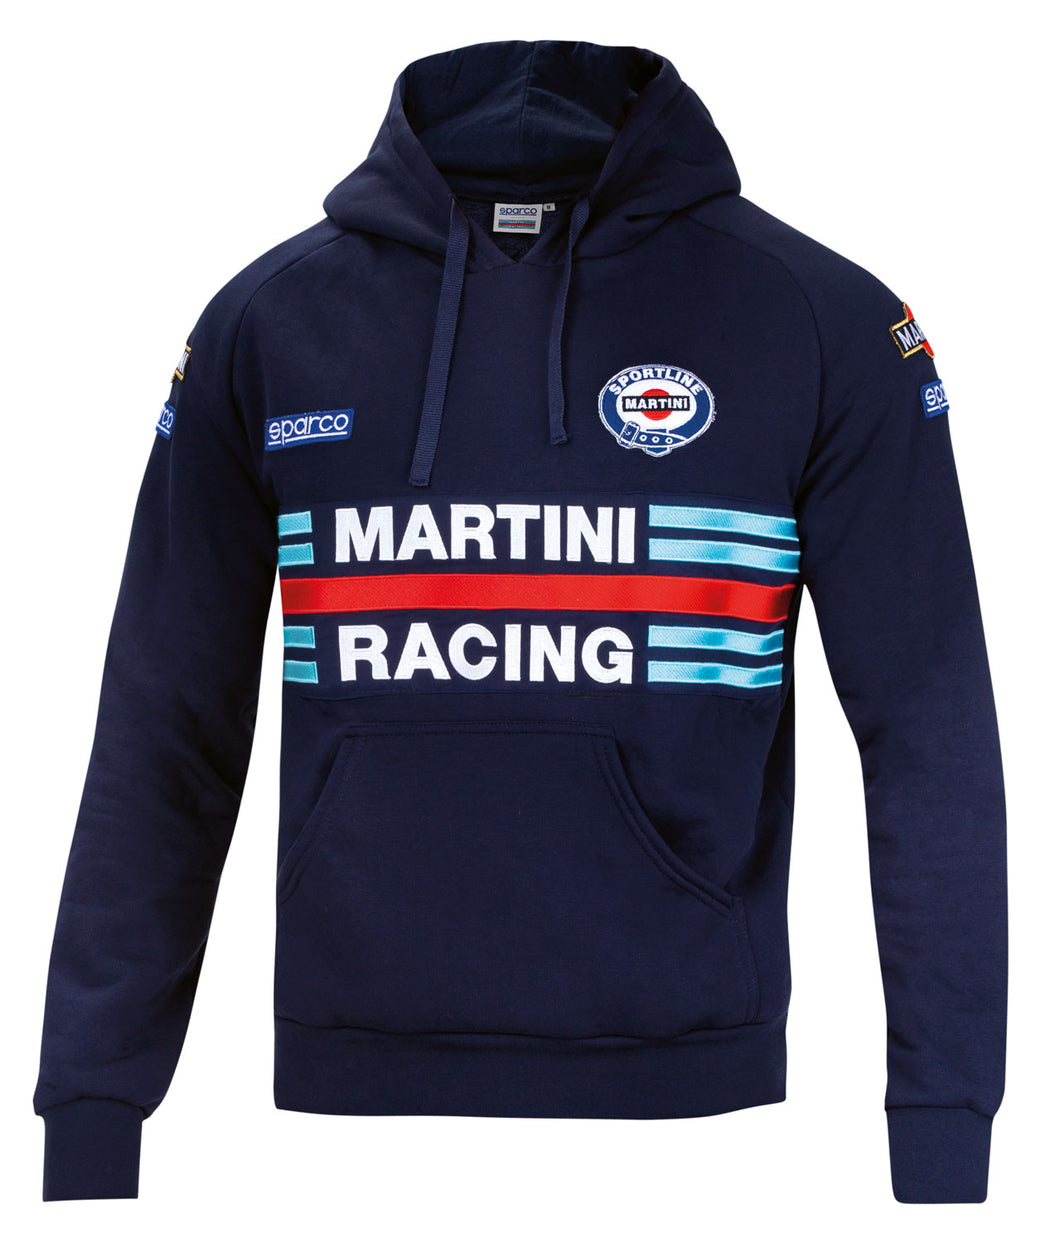 Sparco Hoodie Martini Racing